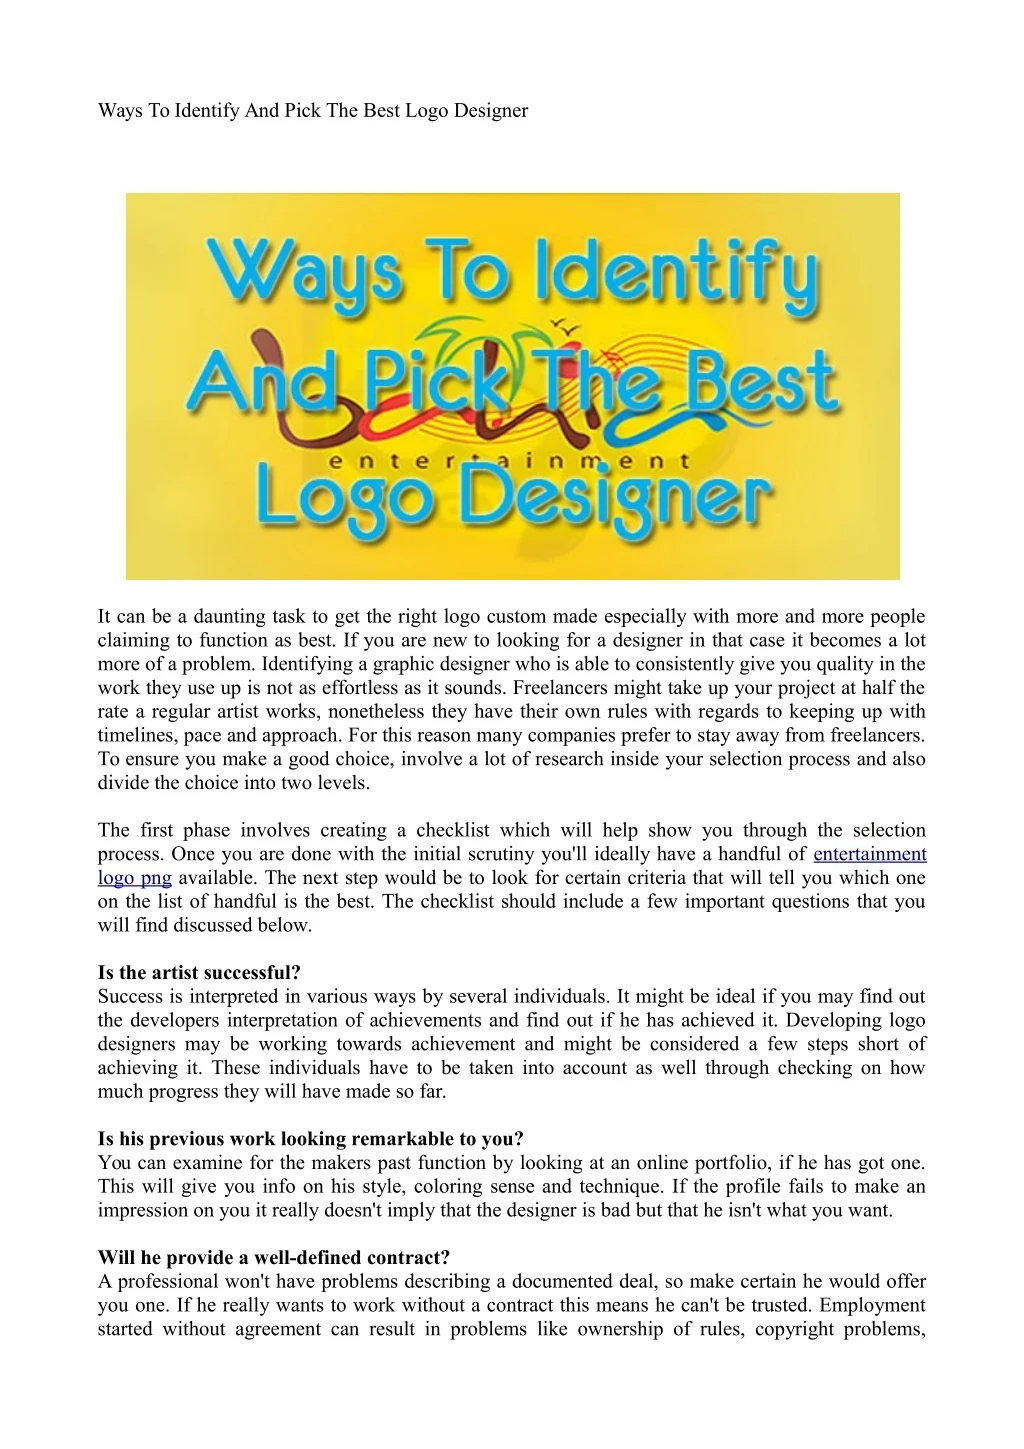 ways to identify and pick the best logo designer